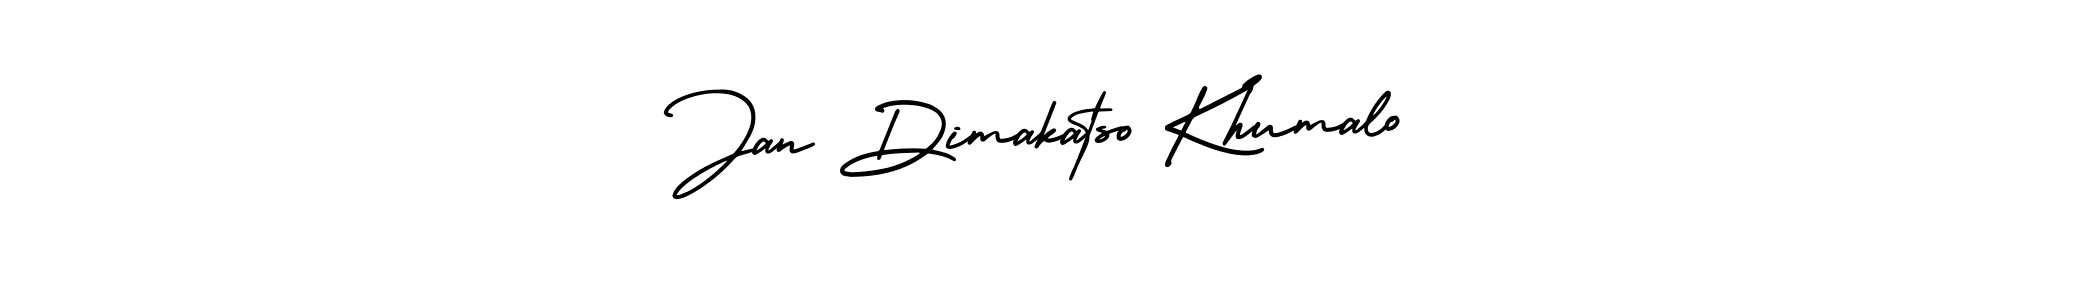 Best and Professional Signature Style for Jan Dimakatso Khumalo. AmerikaSignatureDemo-Regular Best Signature Style Collection. Jan Dimakatso Khumalo signature style 3 images and pictures png